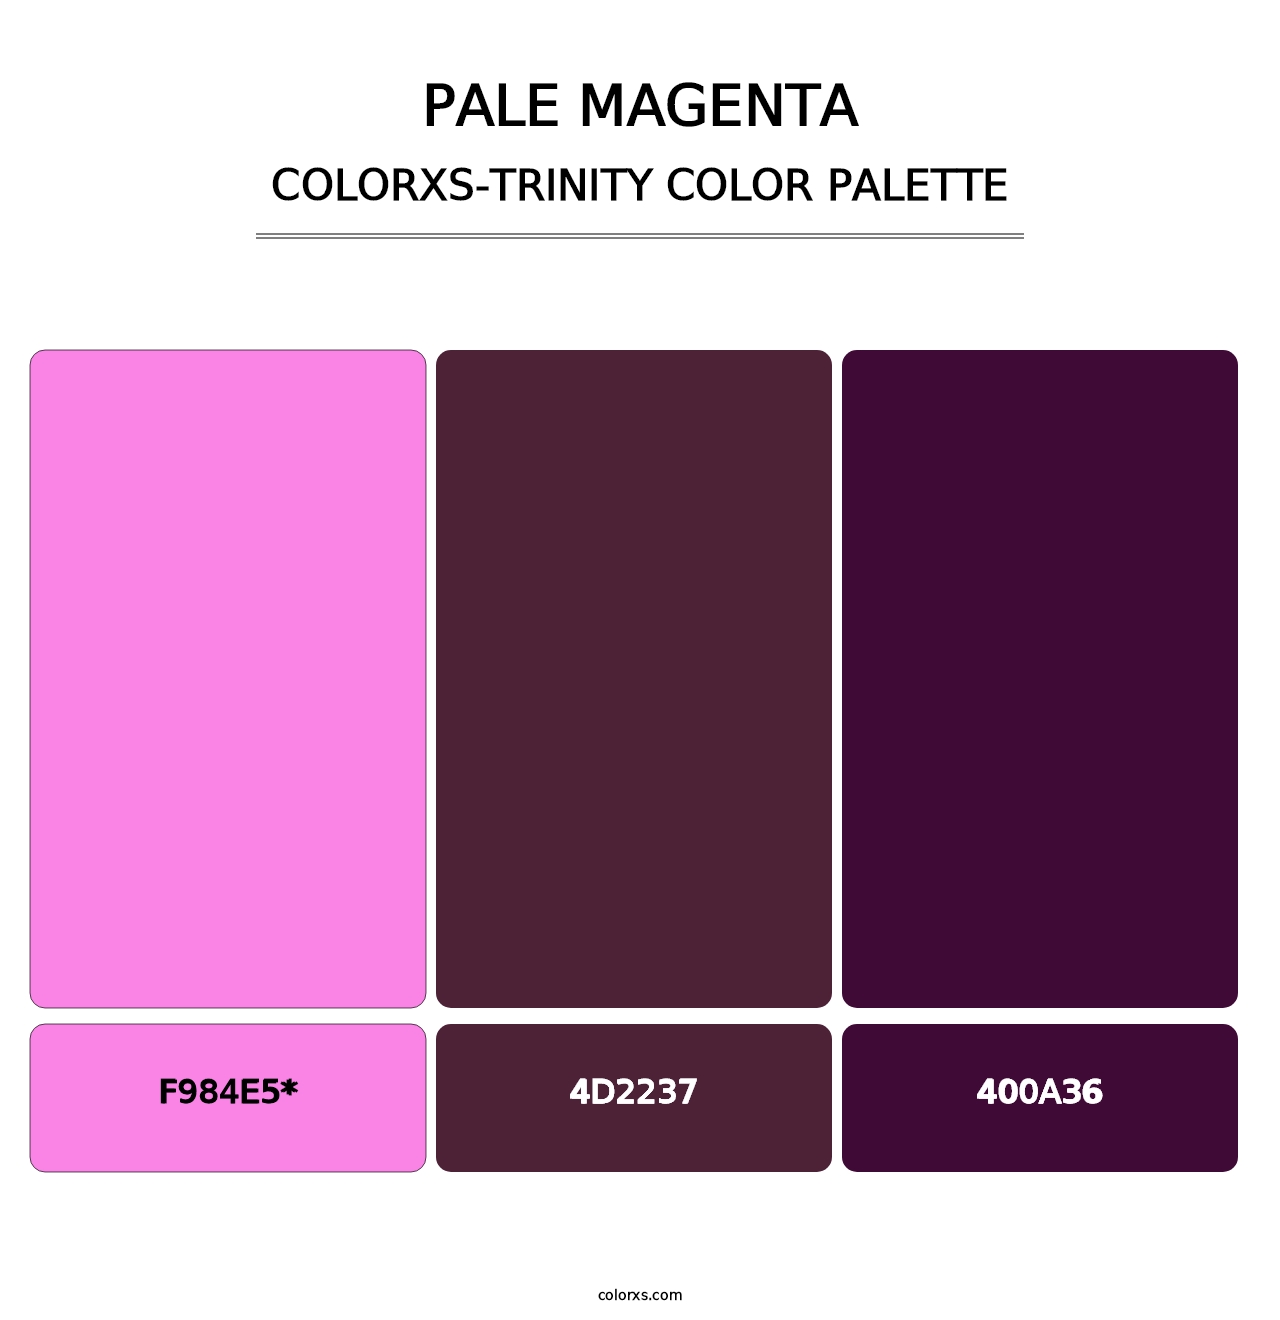 Pale Magenta - Colorxs Trinity Palette